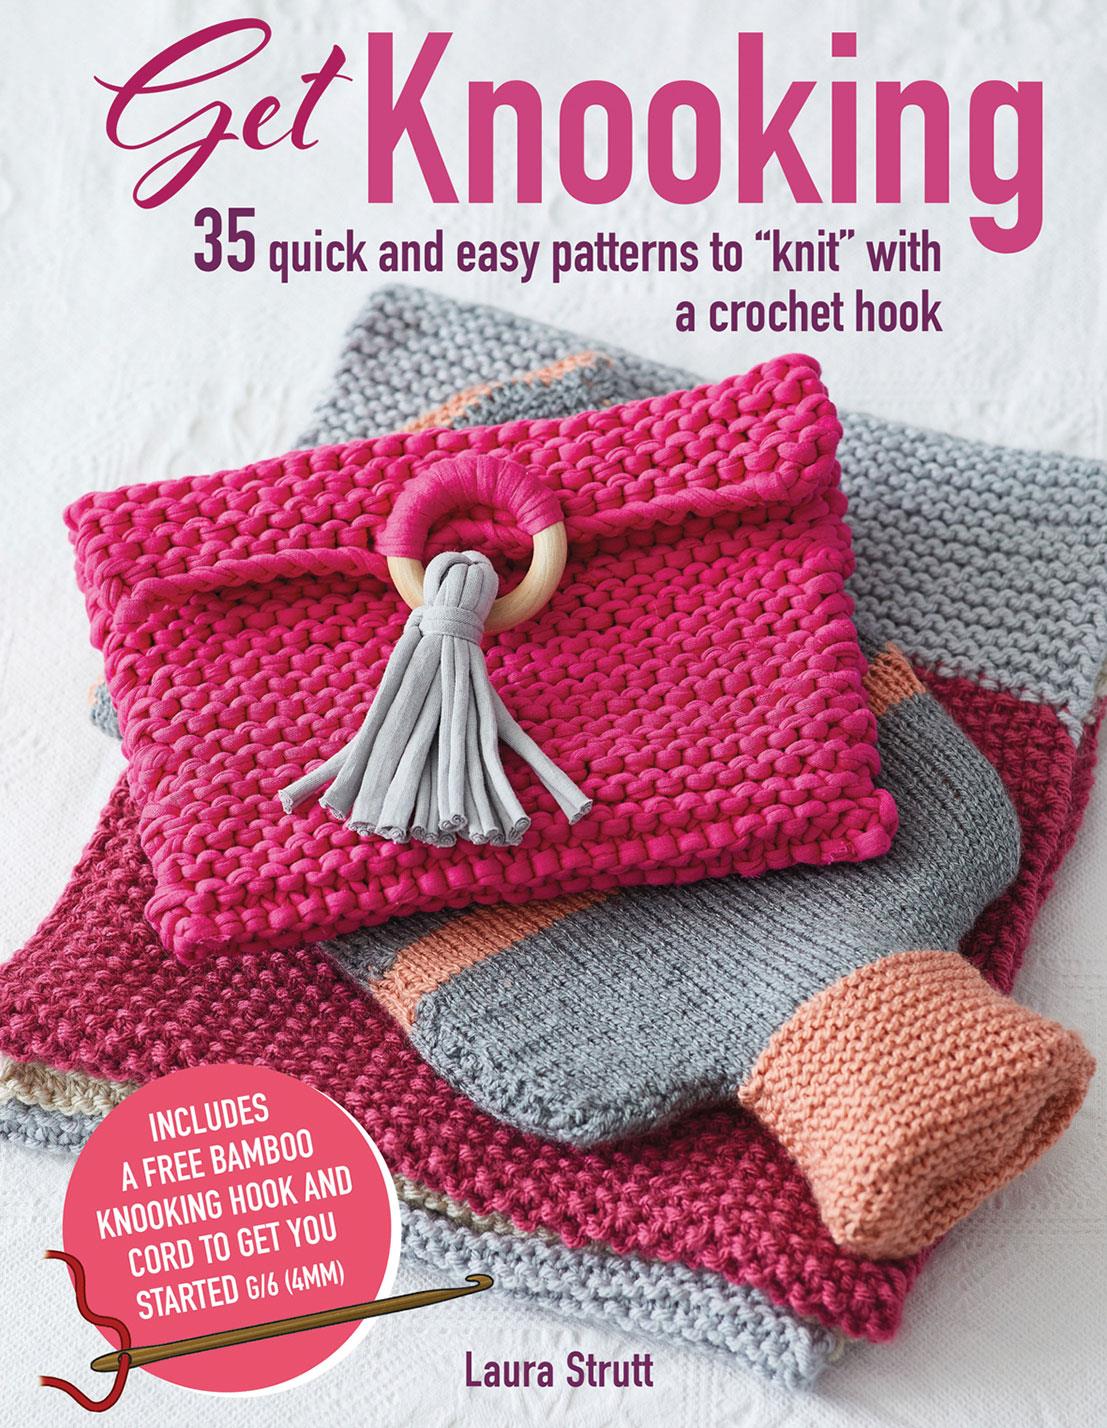 Get Knooking - Pattern Book by Laura Strutt